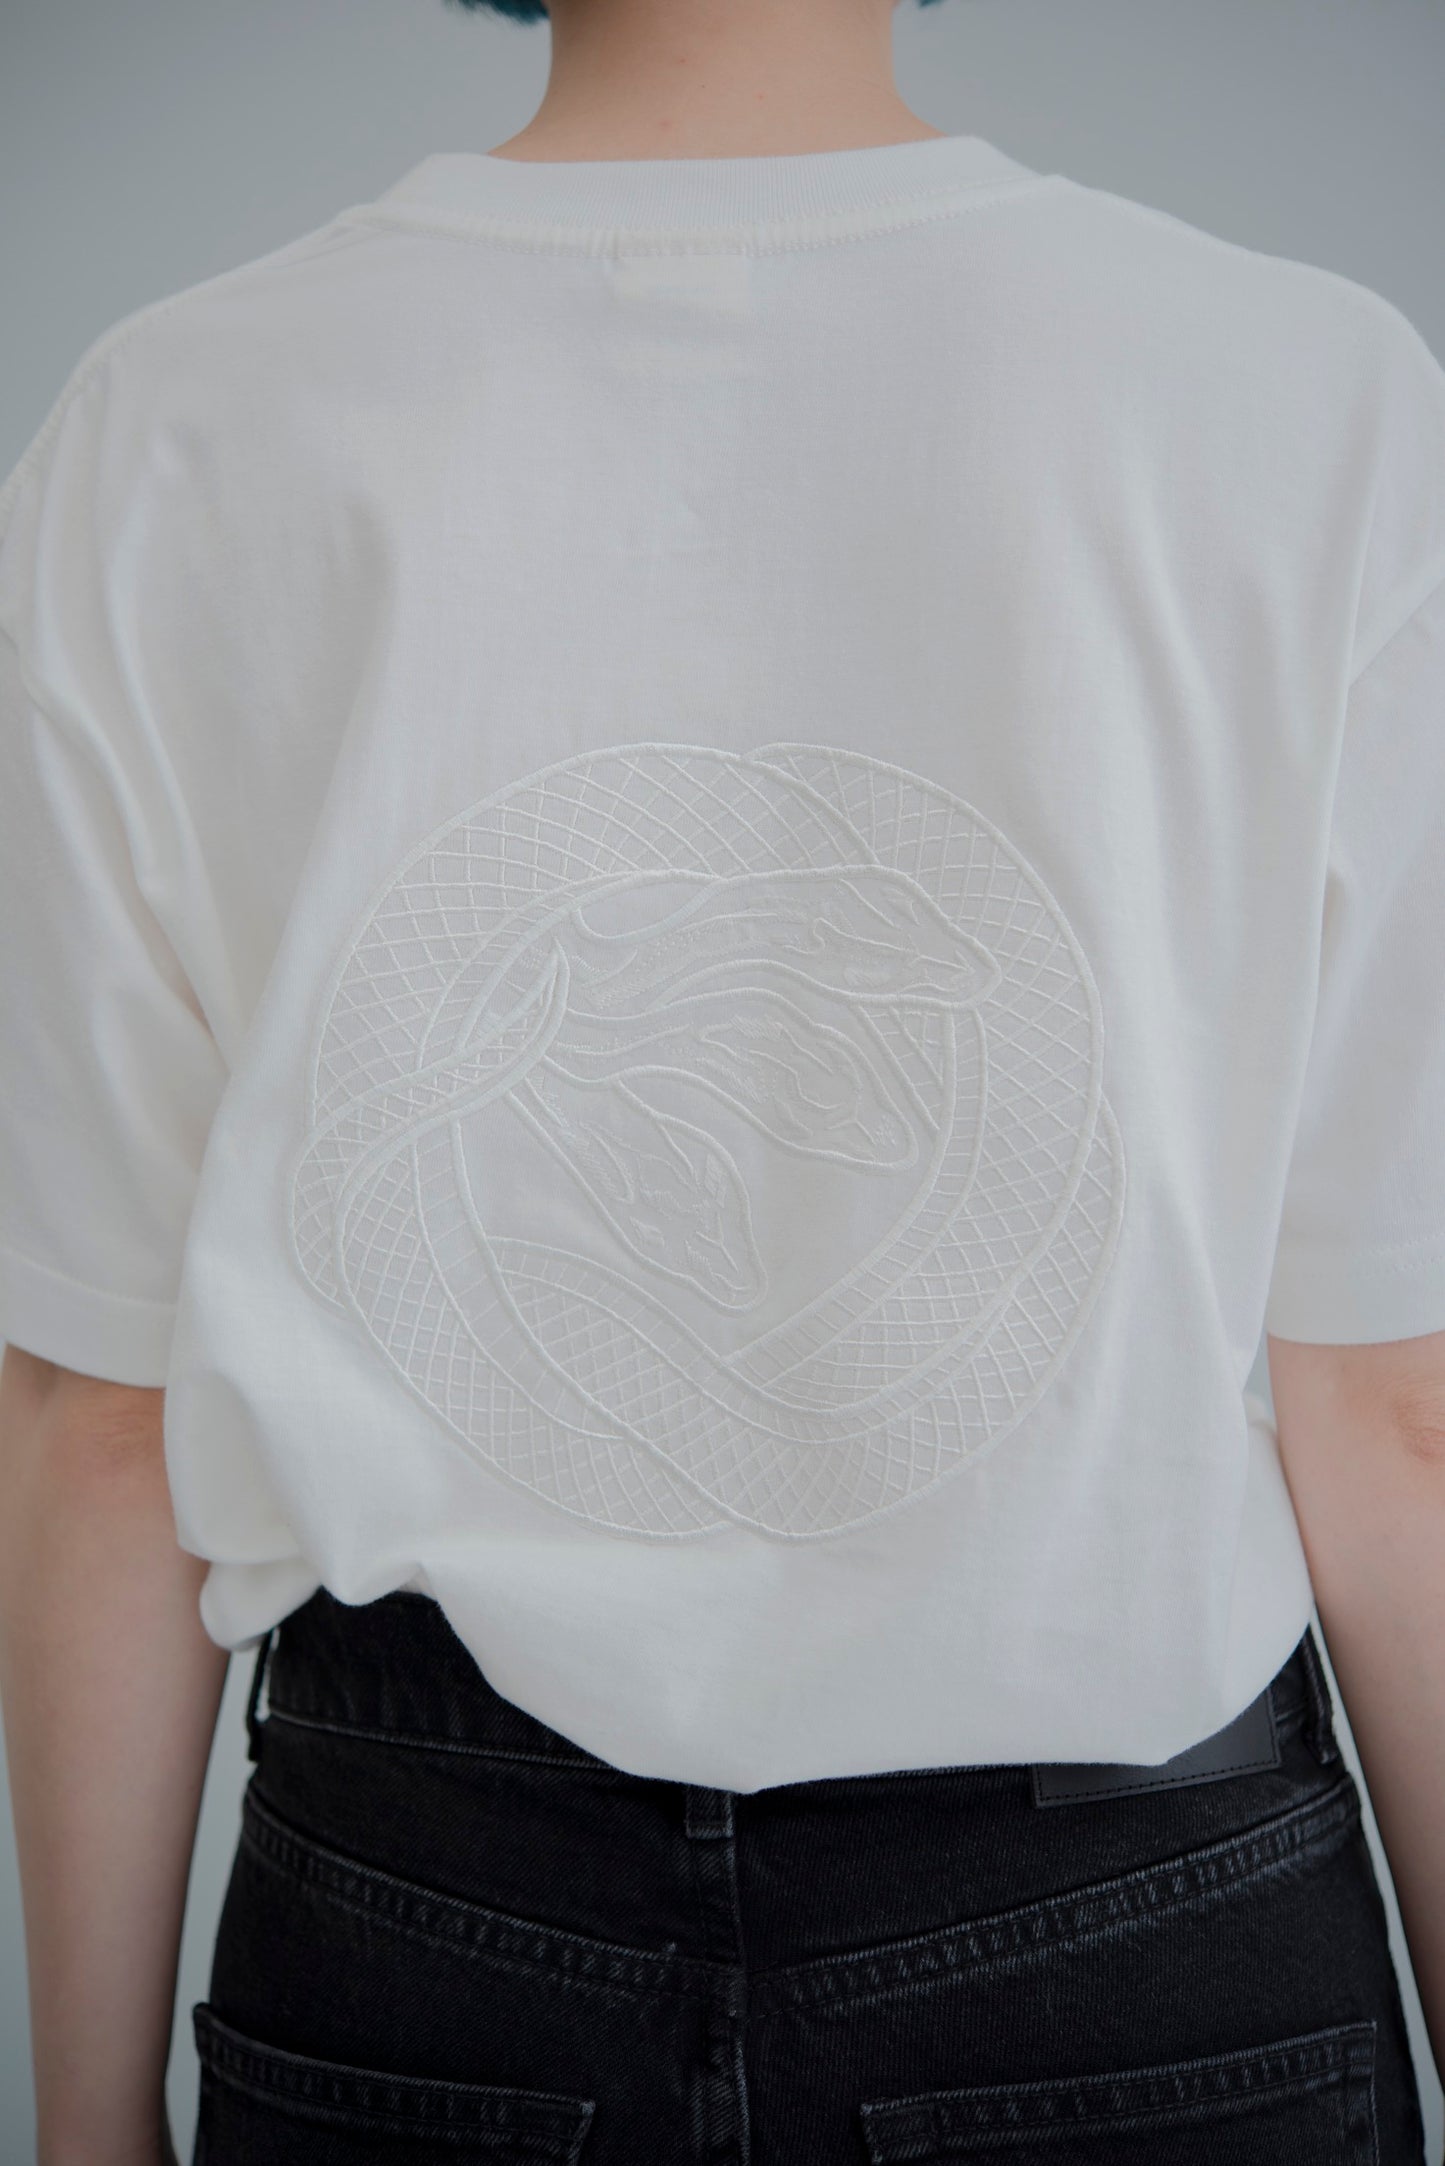 Three headed snake white T-shirt 【Stock】